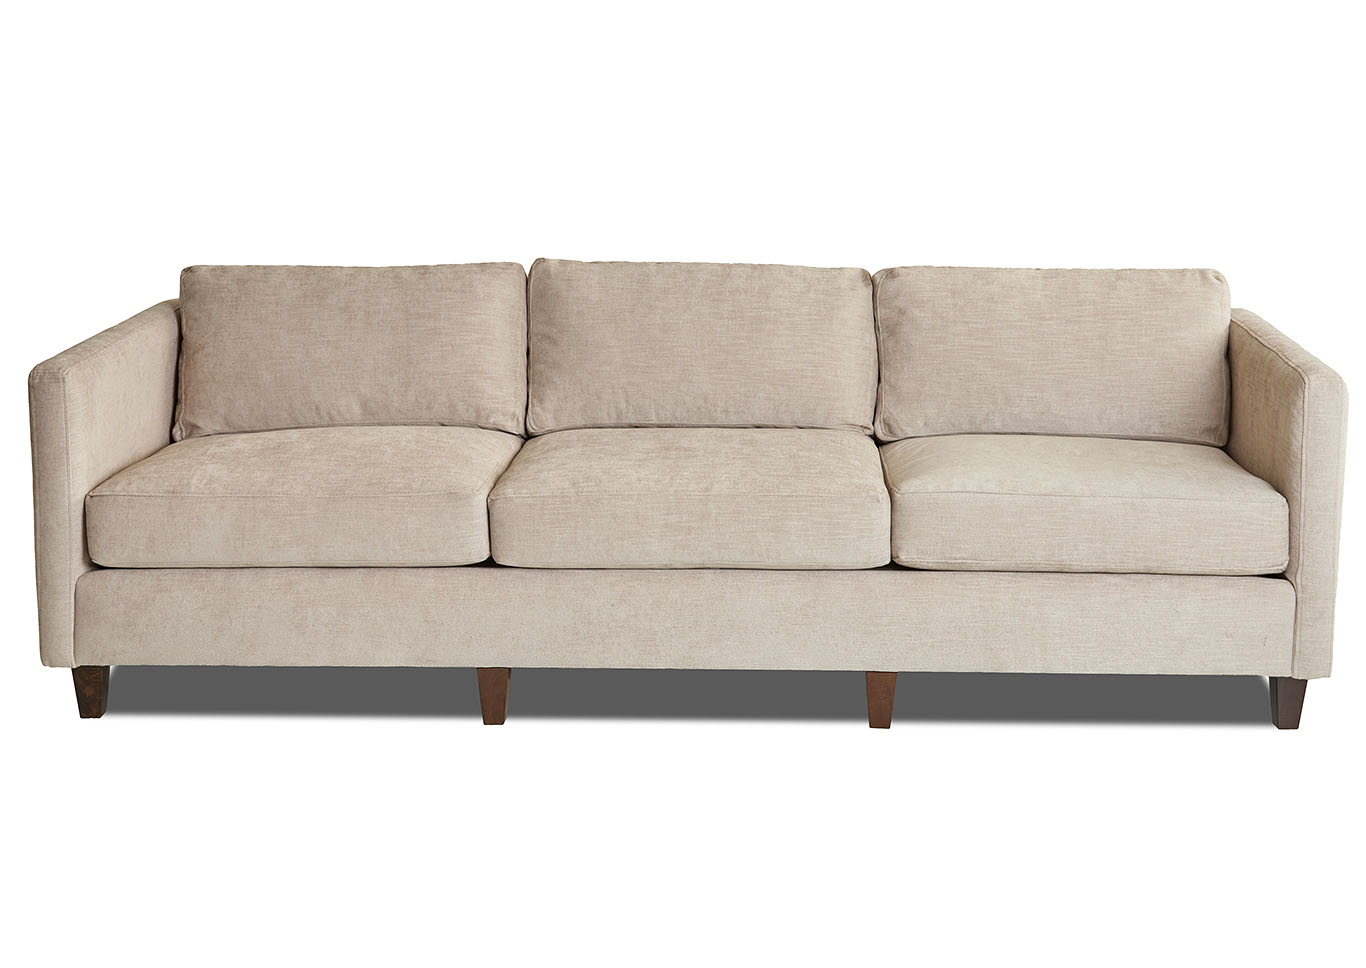 Soho Edwin Latte Stationary Fabric Sofa,Klaussner Home Furnishings